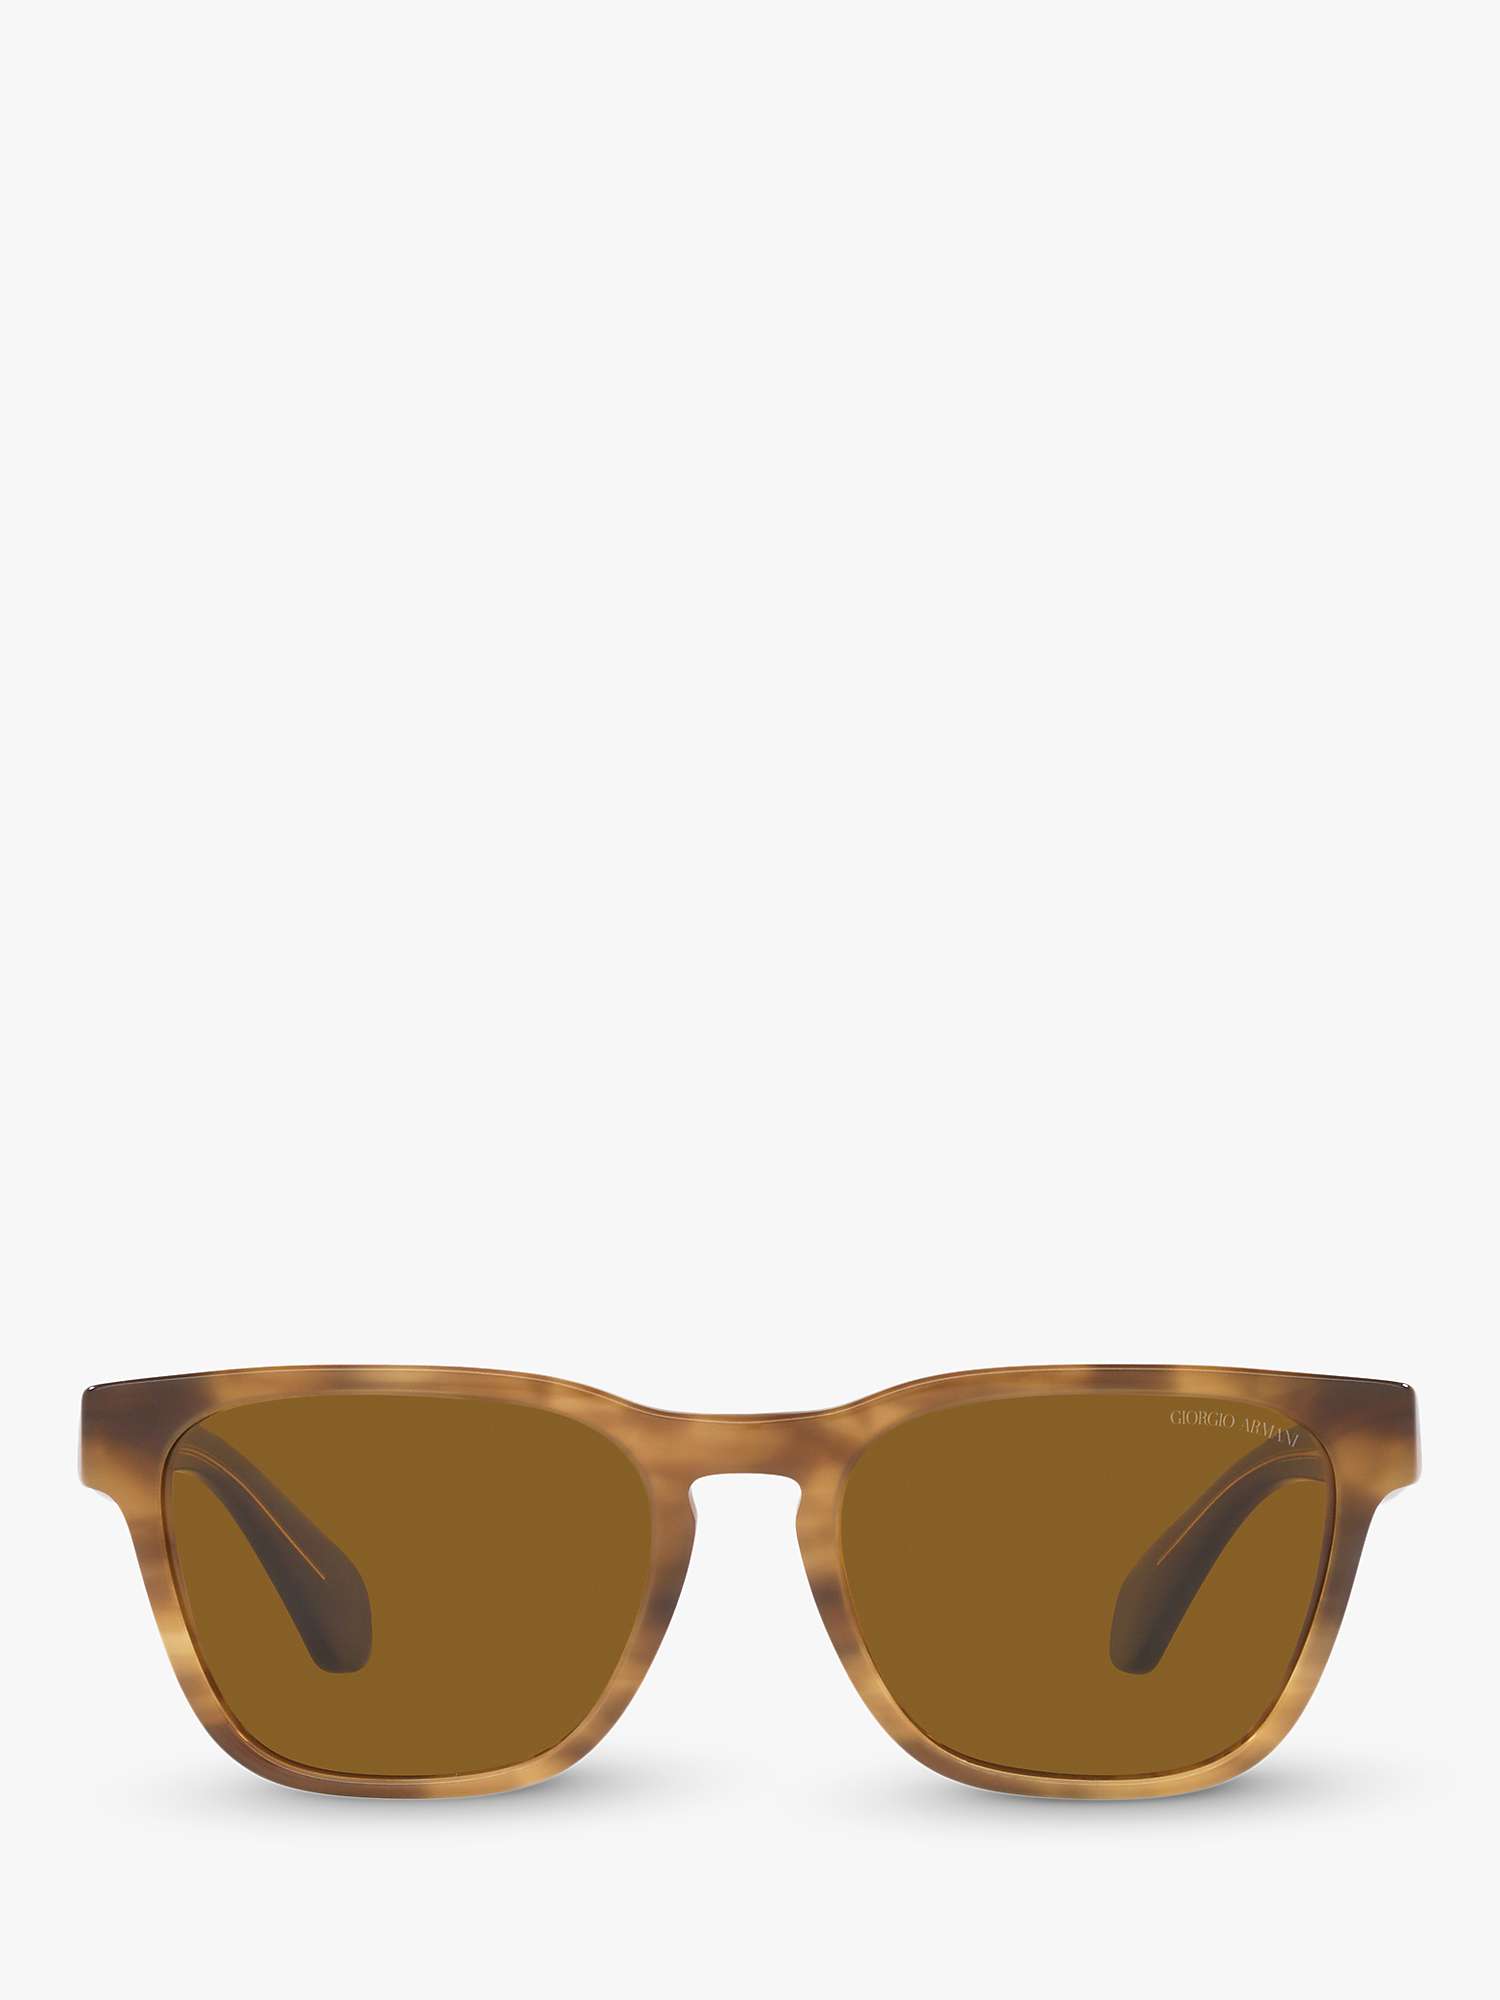 Buy Giorgio Armani AR8155 Men's D-Frame Sunglasses, Brown Online at johnlewis.com